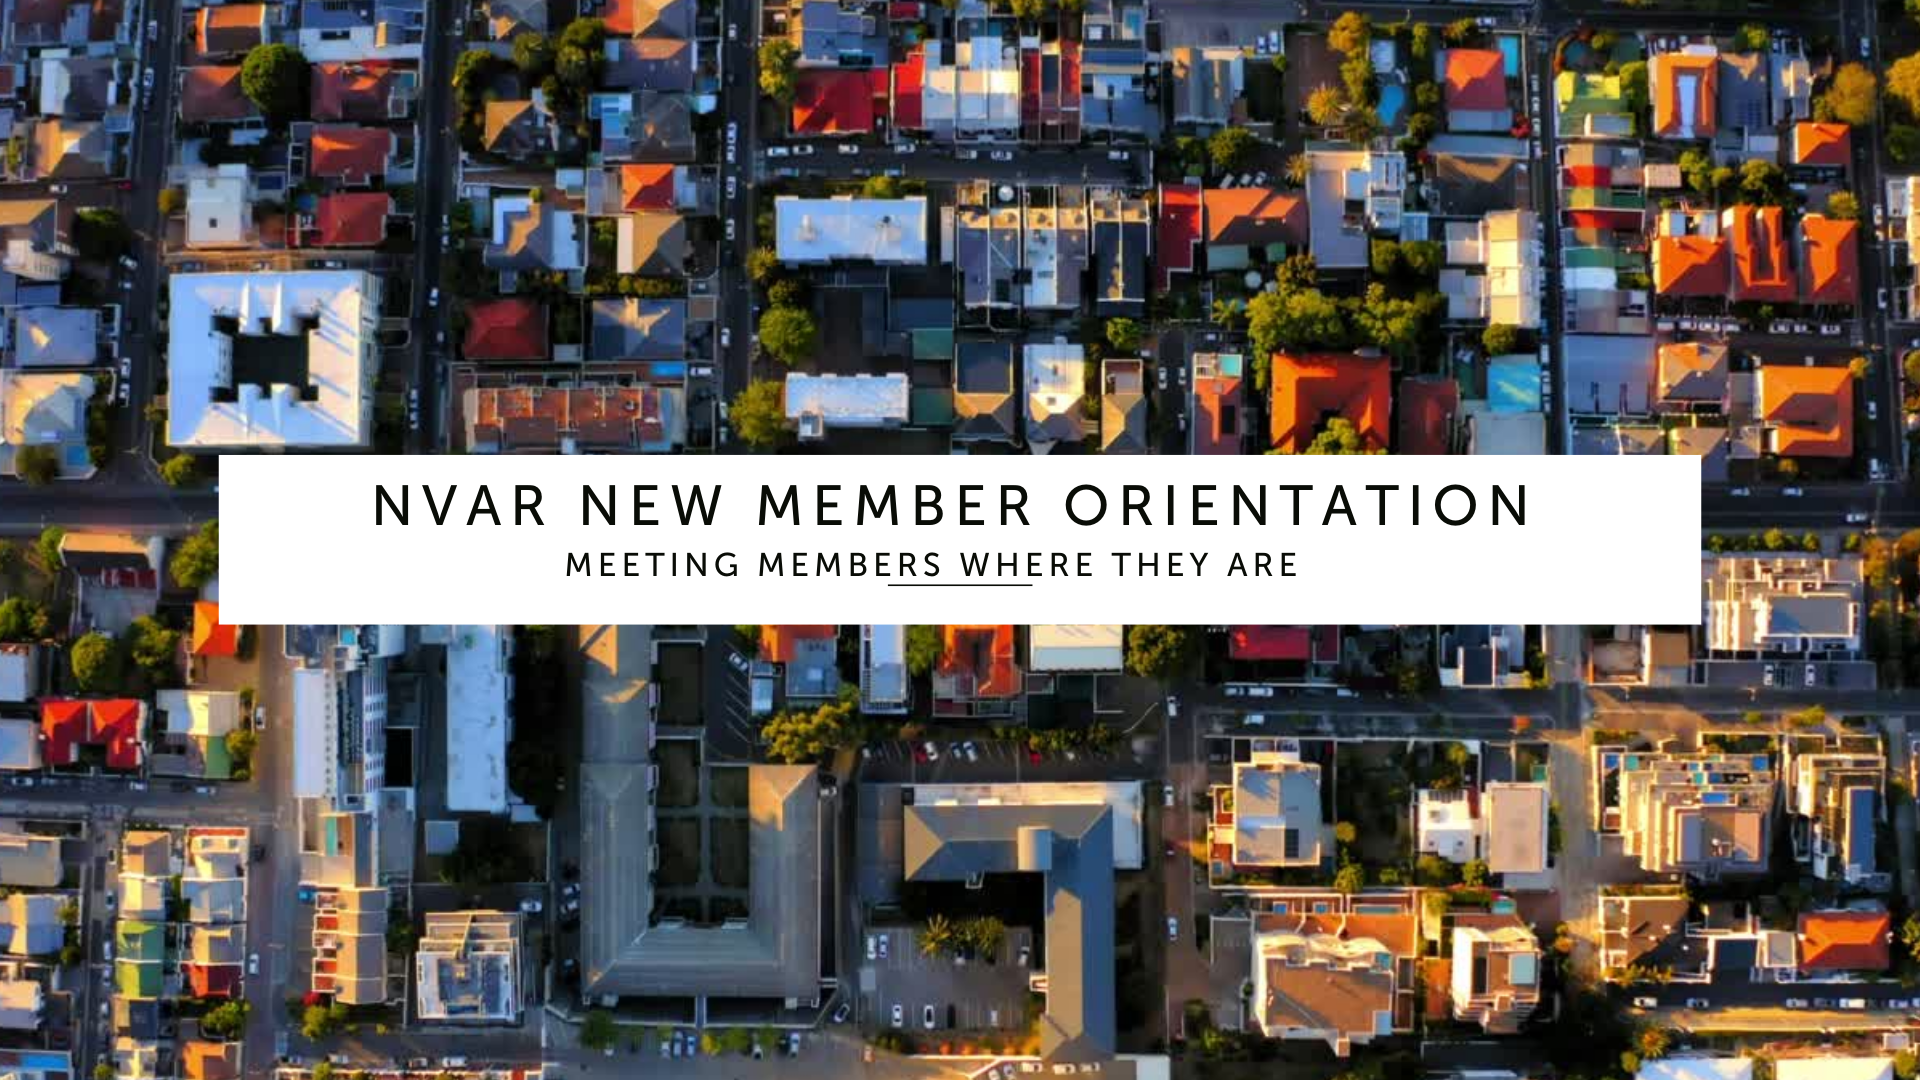 NVAR New Member Orientation (1)